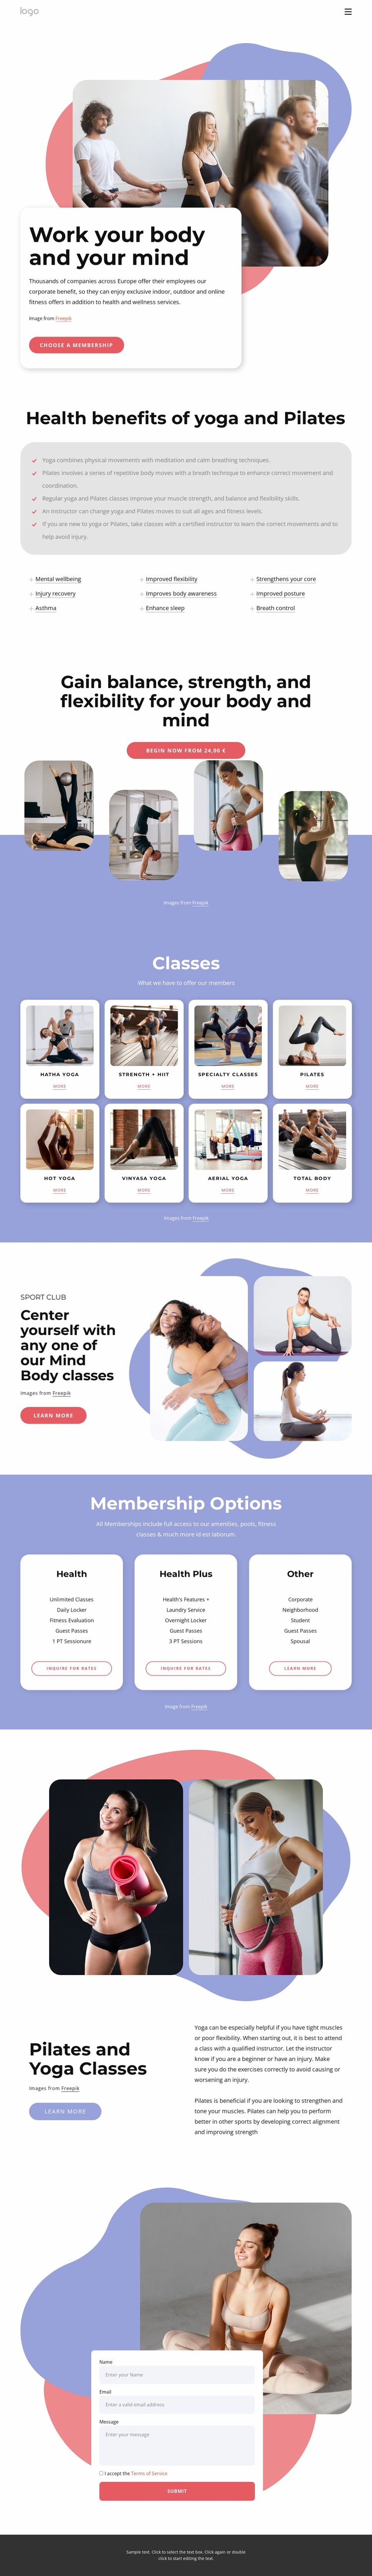 Pilates and yoga classes Website Mockup